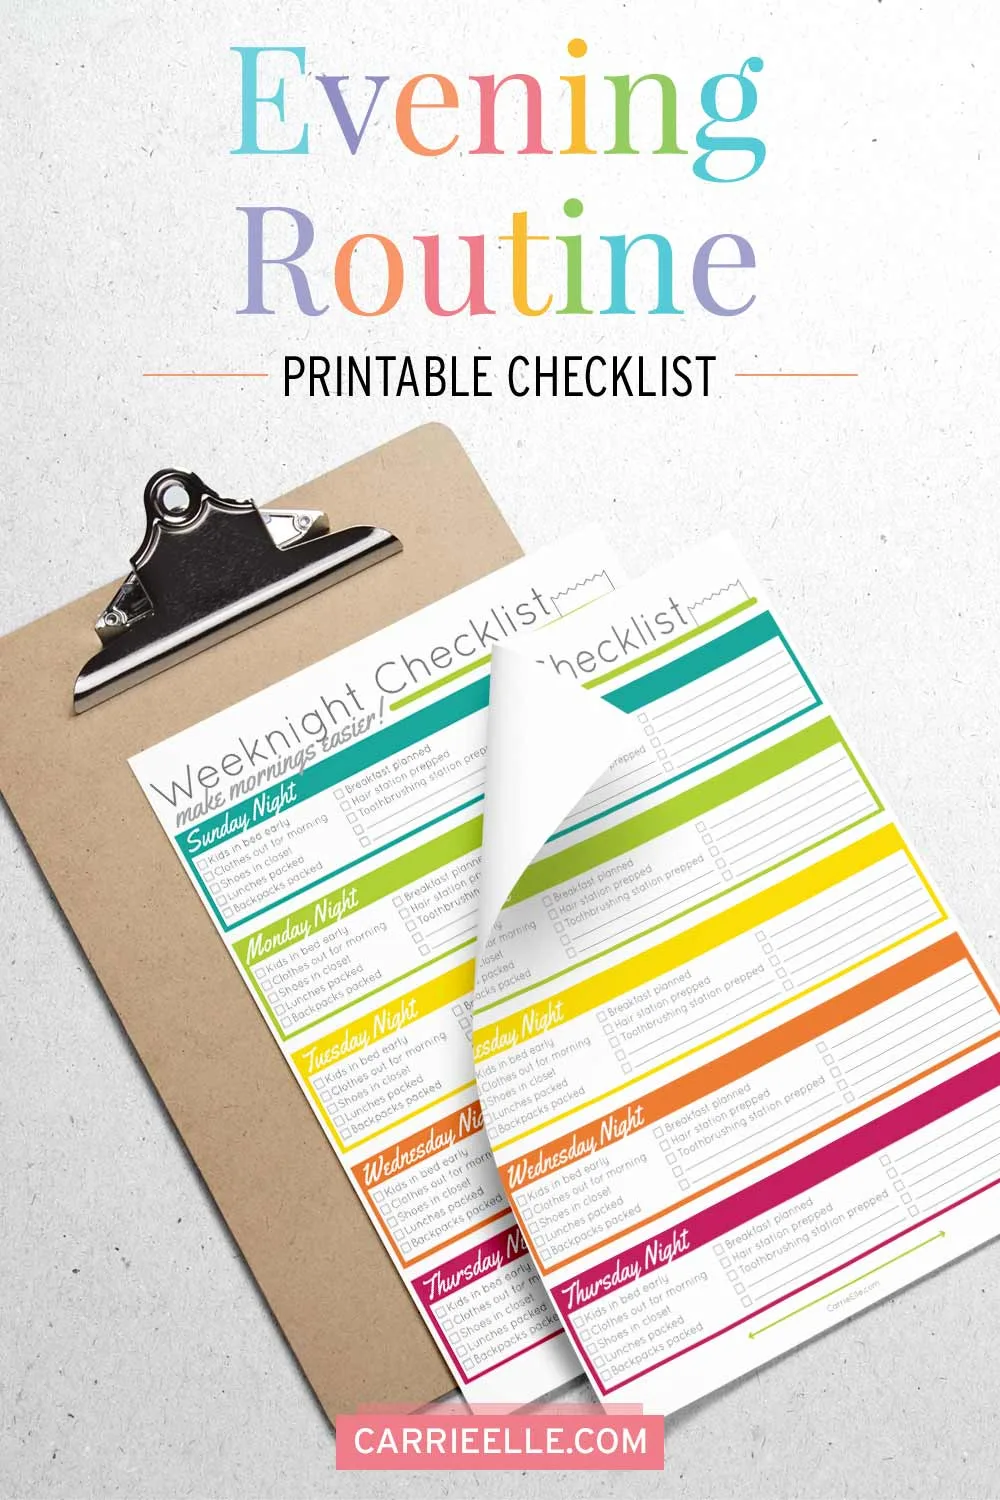 Printable Evening Routine Checklist Carrieelle.com